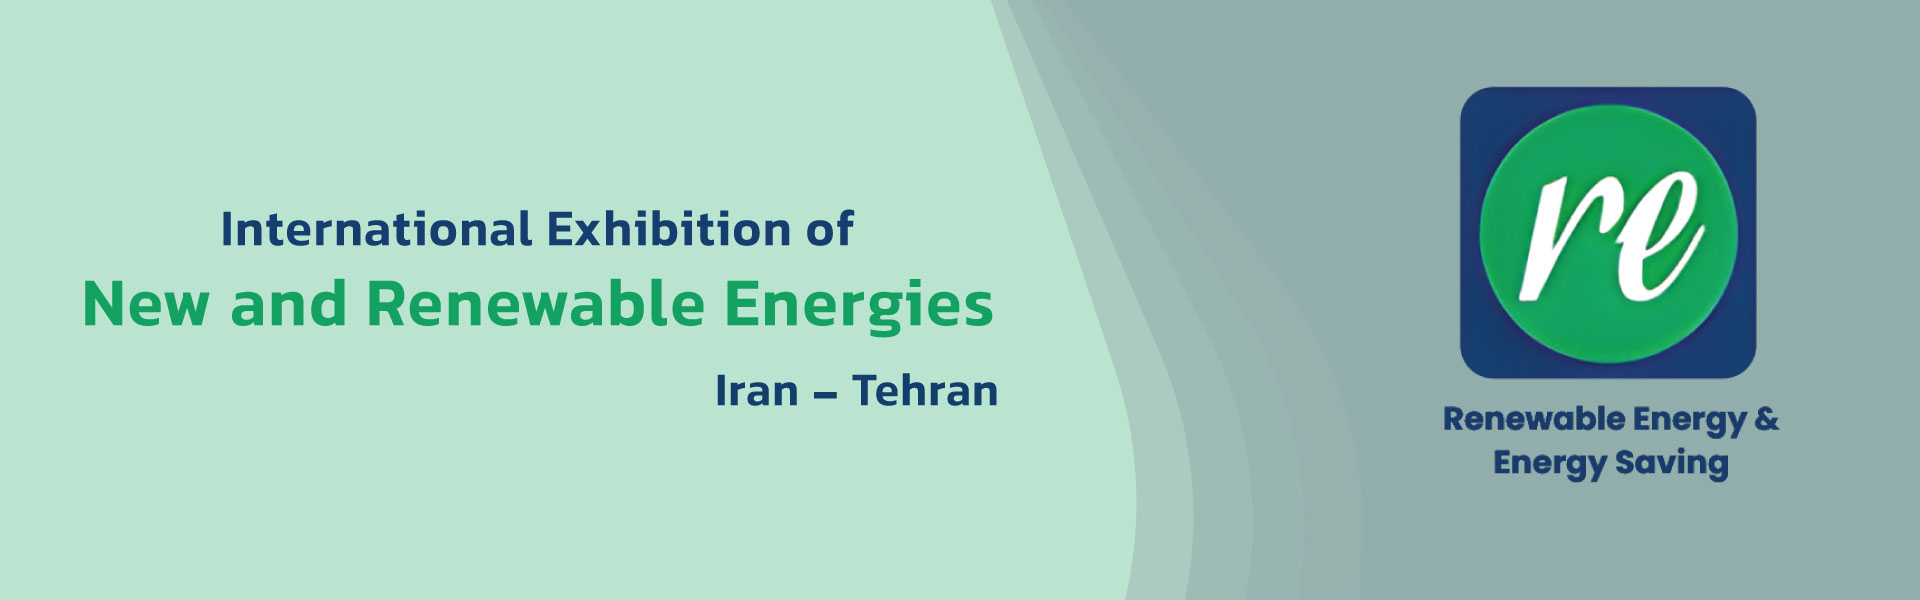 Environment, New and Renewable Energies Exhibition of Iran Tehran